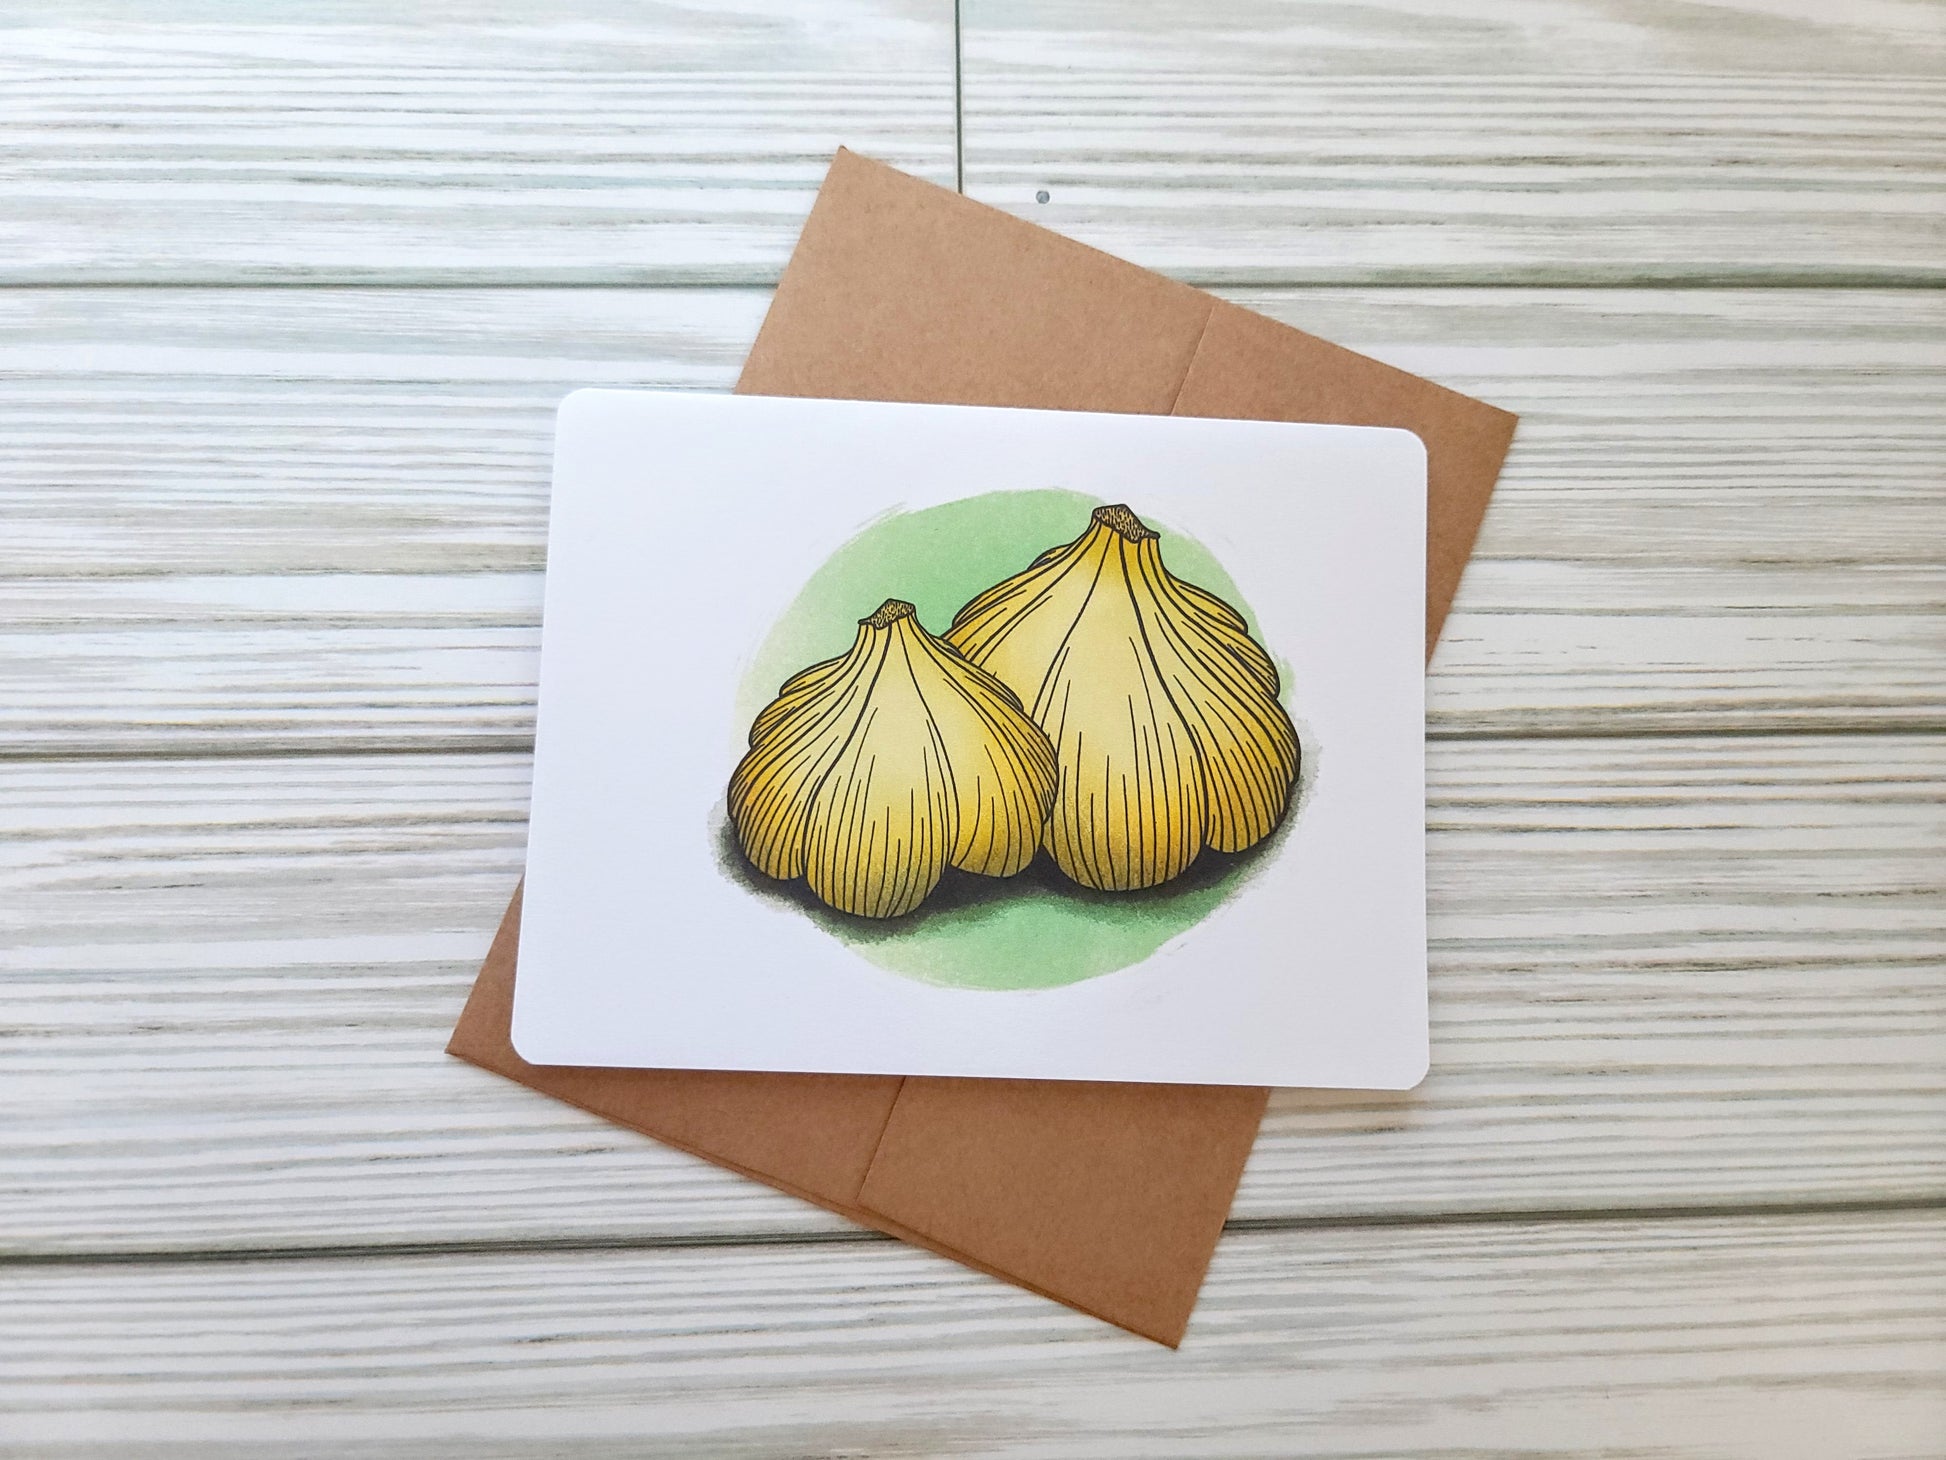 Garlic Handmade Greeting Card - Recycled Paper and Kraft Envelope - Lanscape Overhead Shot